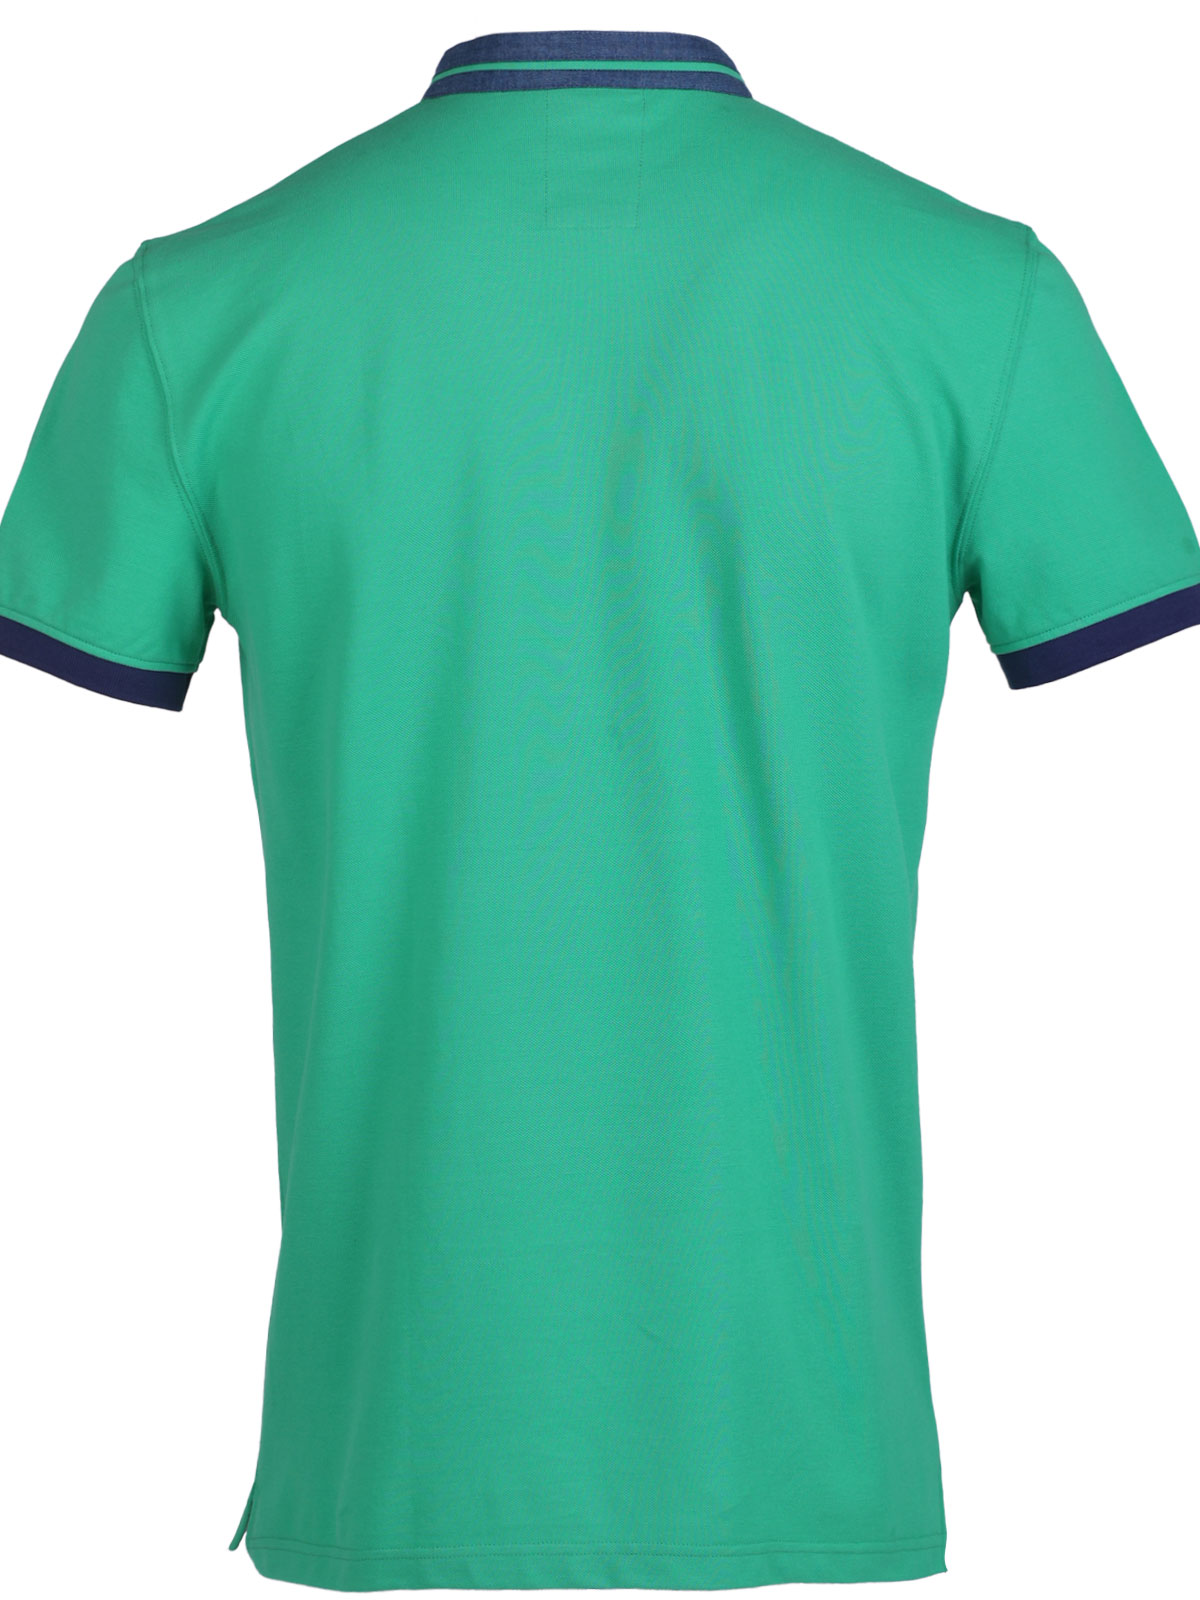 Blouse with short sleeves green melange - 93440 € 40.49 img2